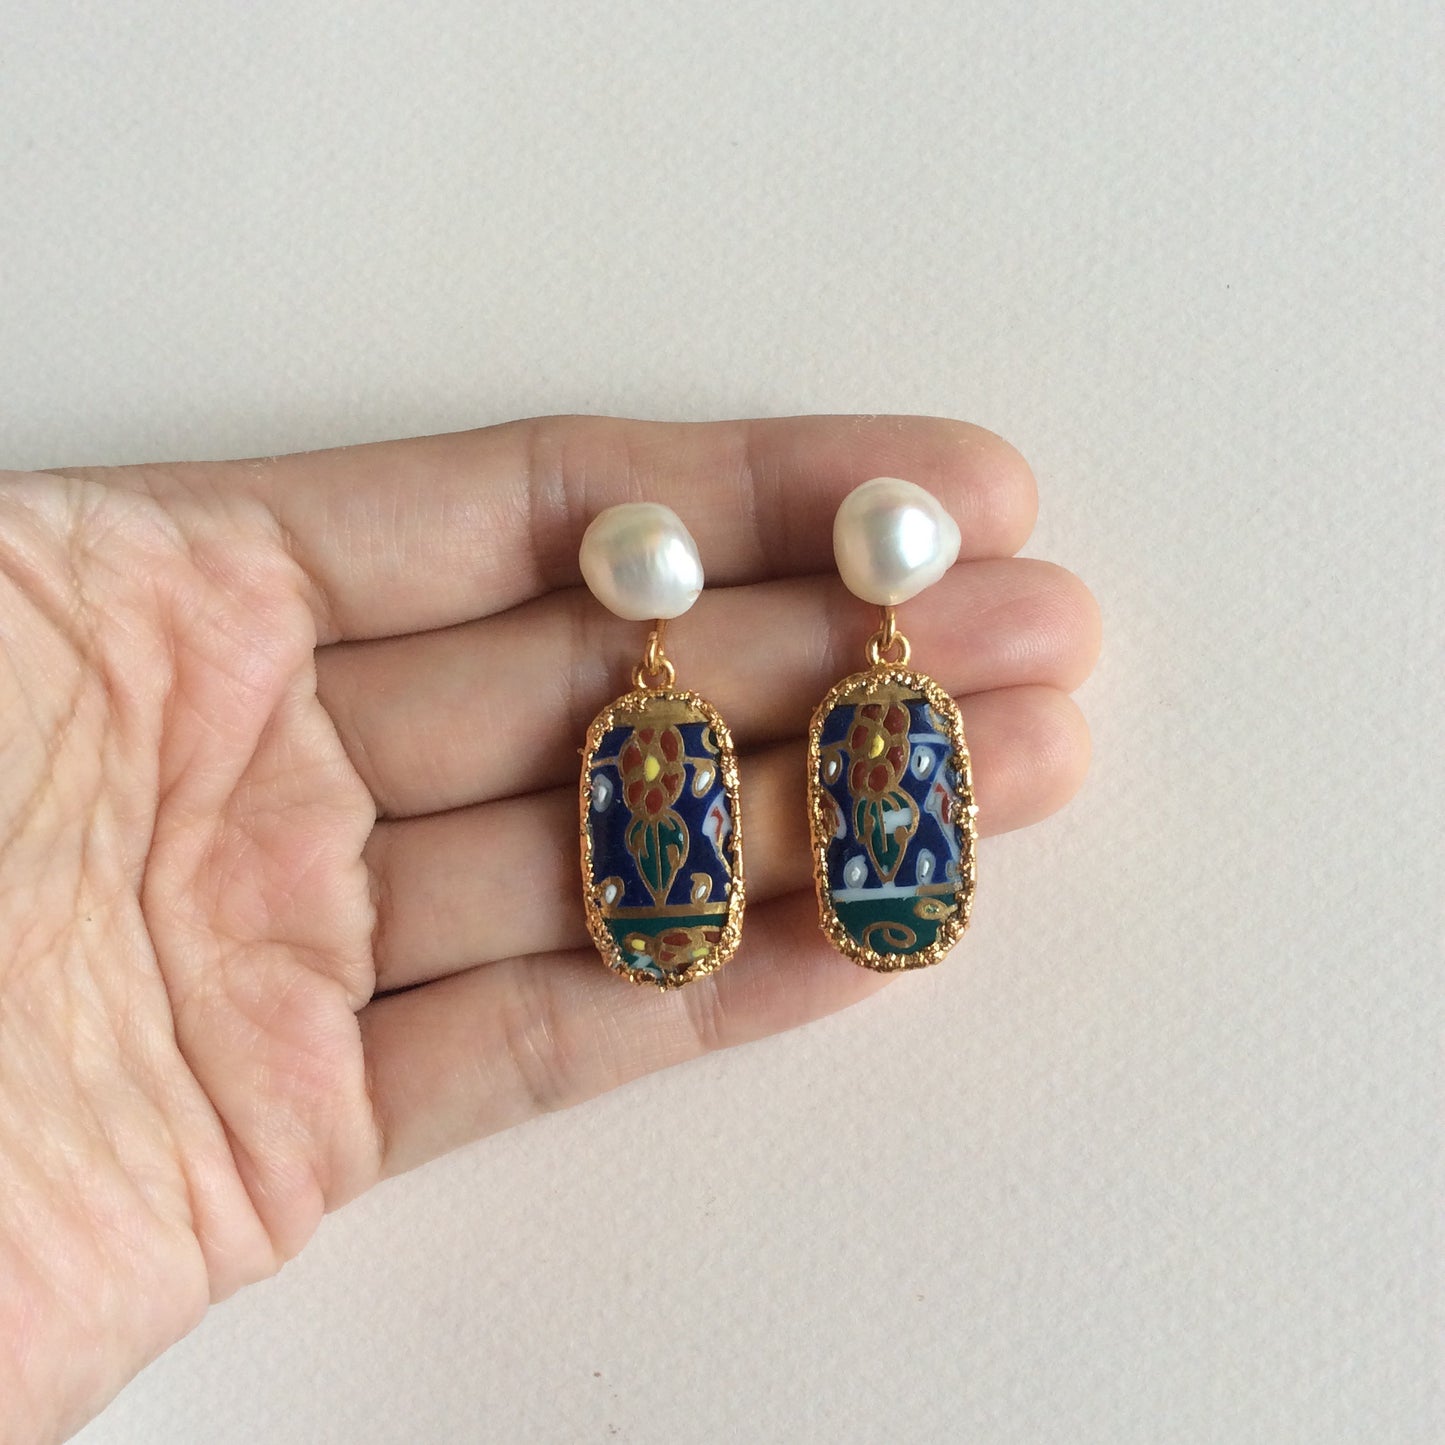 Indigo batik porcelain earrings with freshwater pearl studs